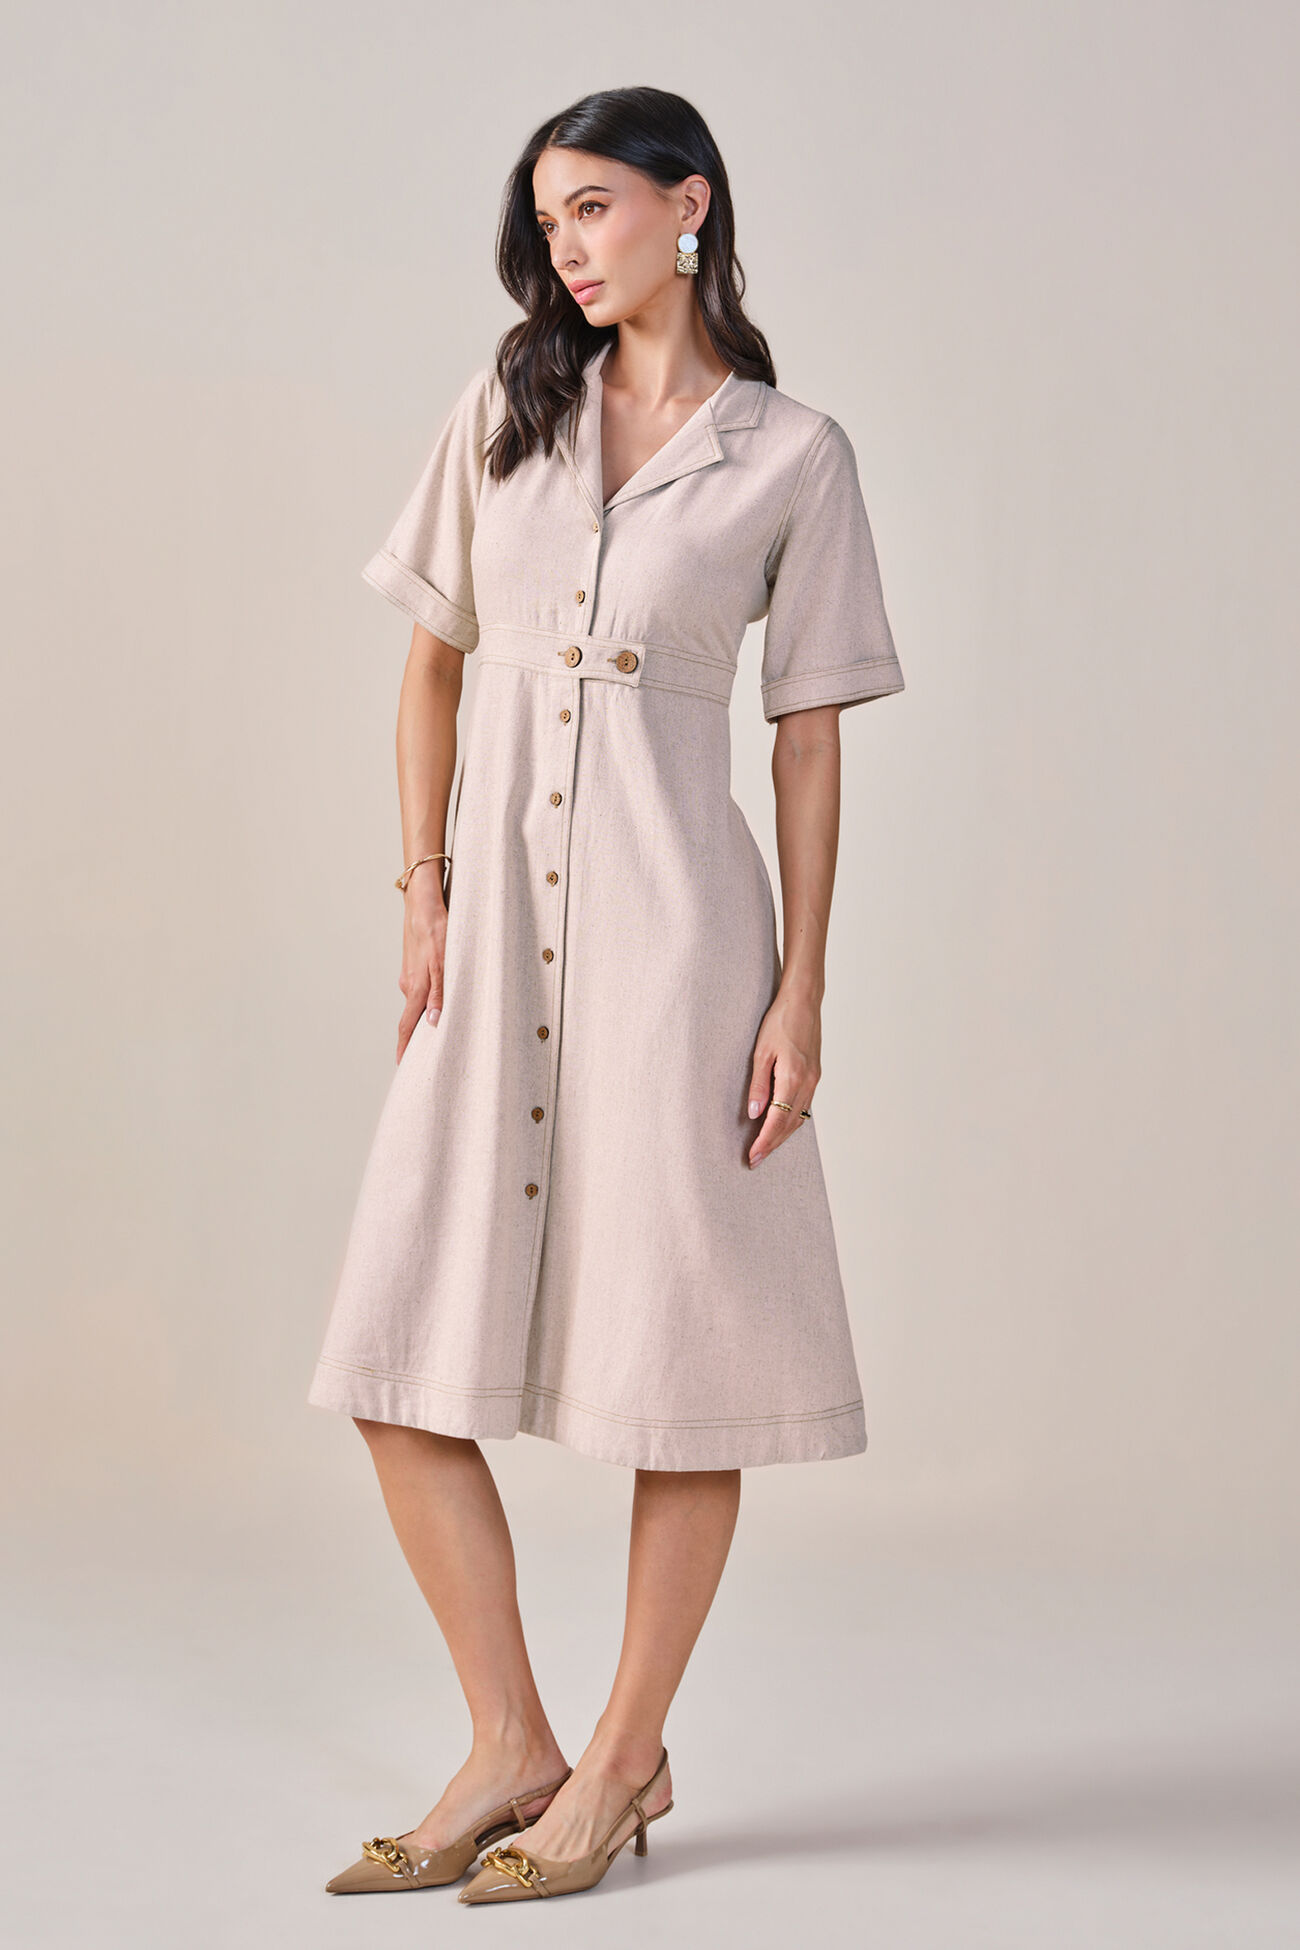 Urbanic Viscose Linen Blend Dress, Beige, image 2